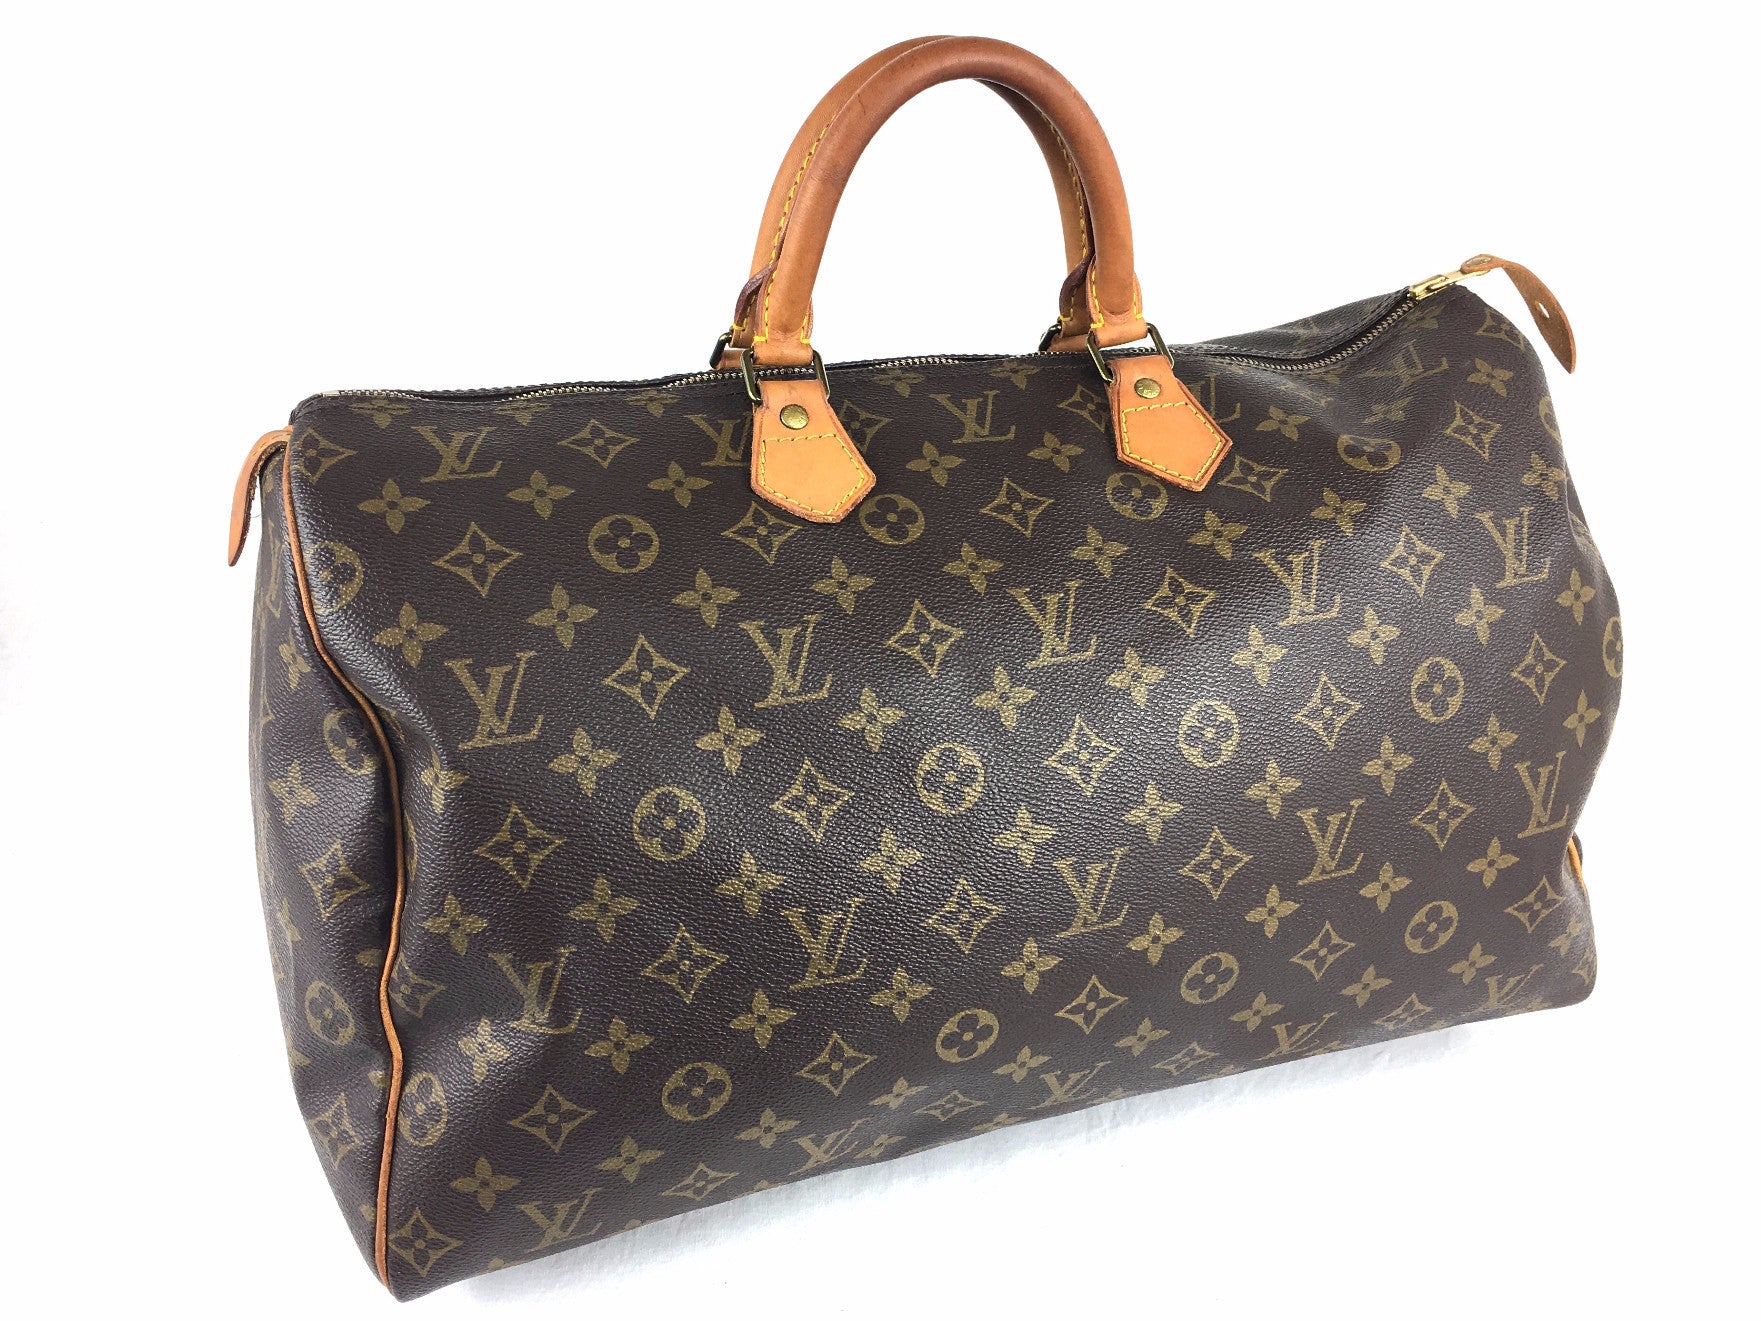 What's in my bag, Louis Vuitton, SPEEDY 40